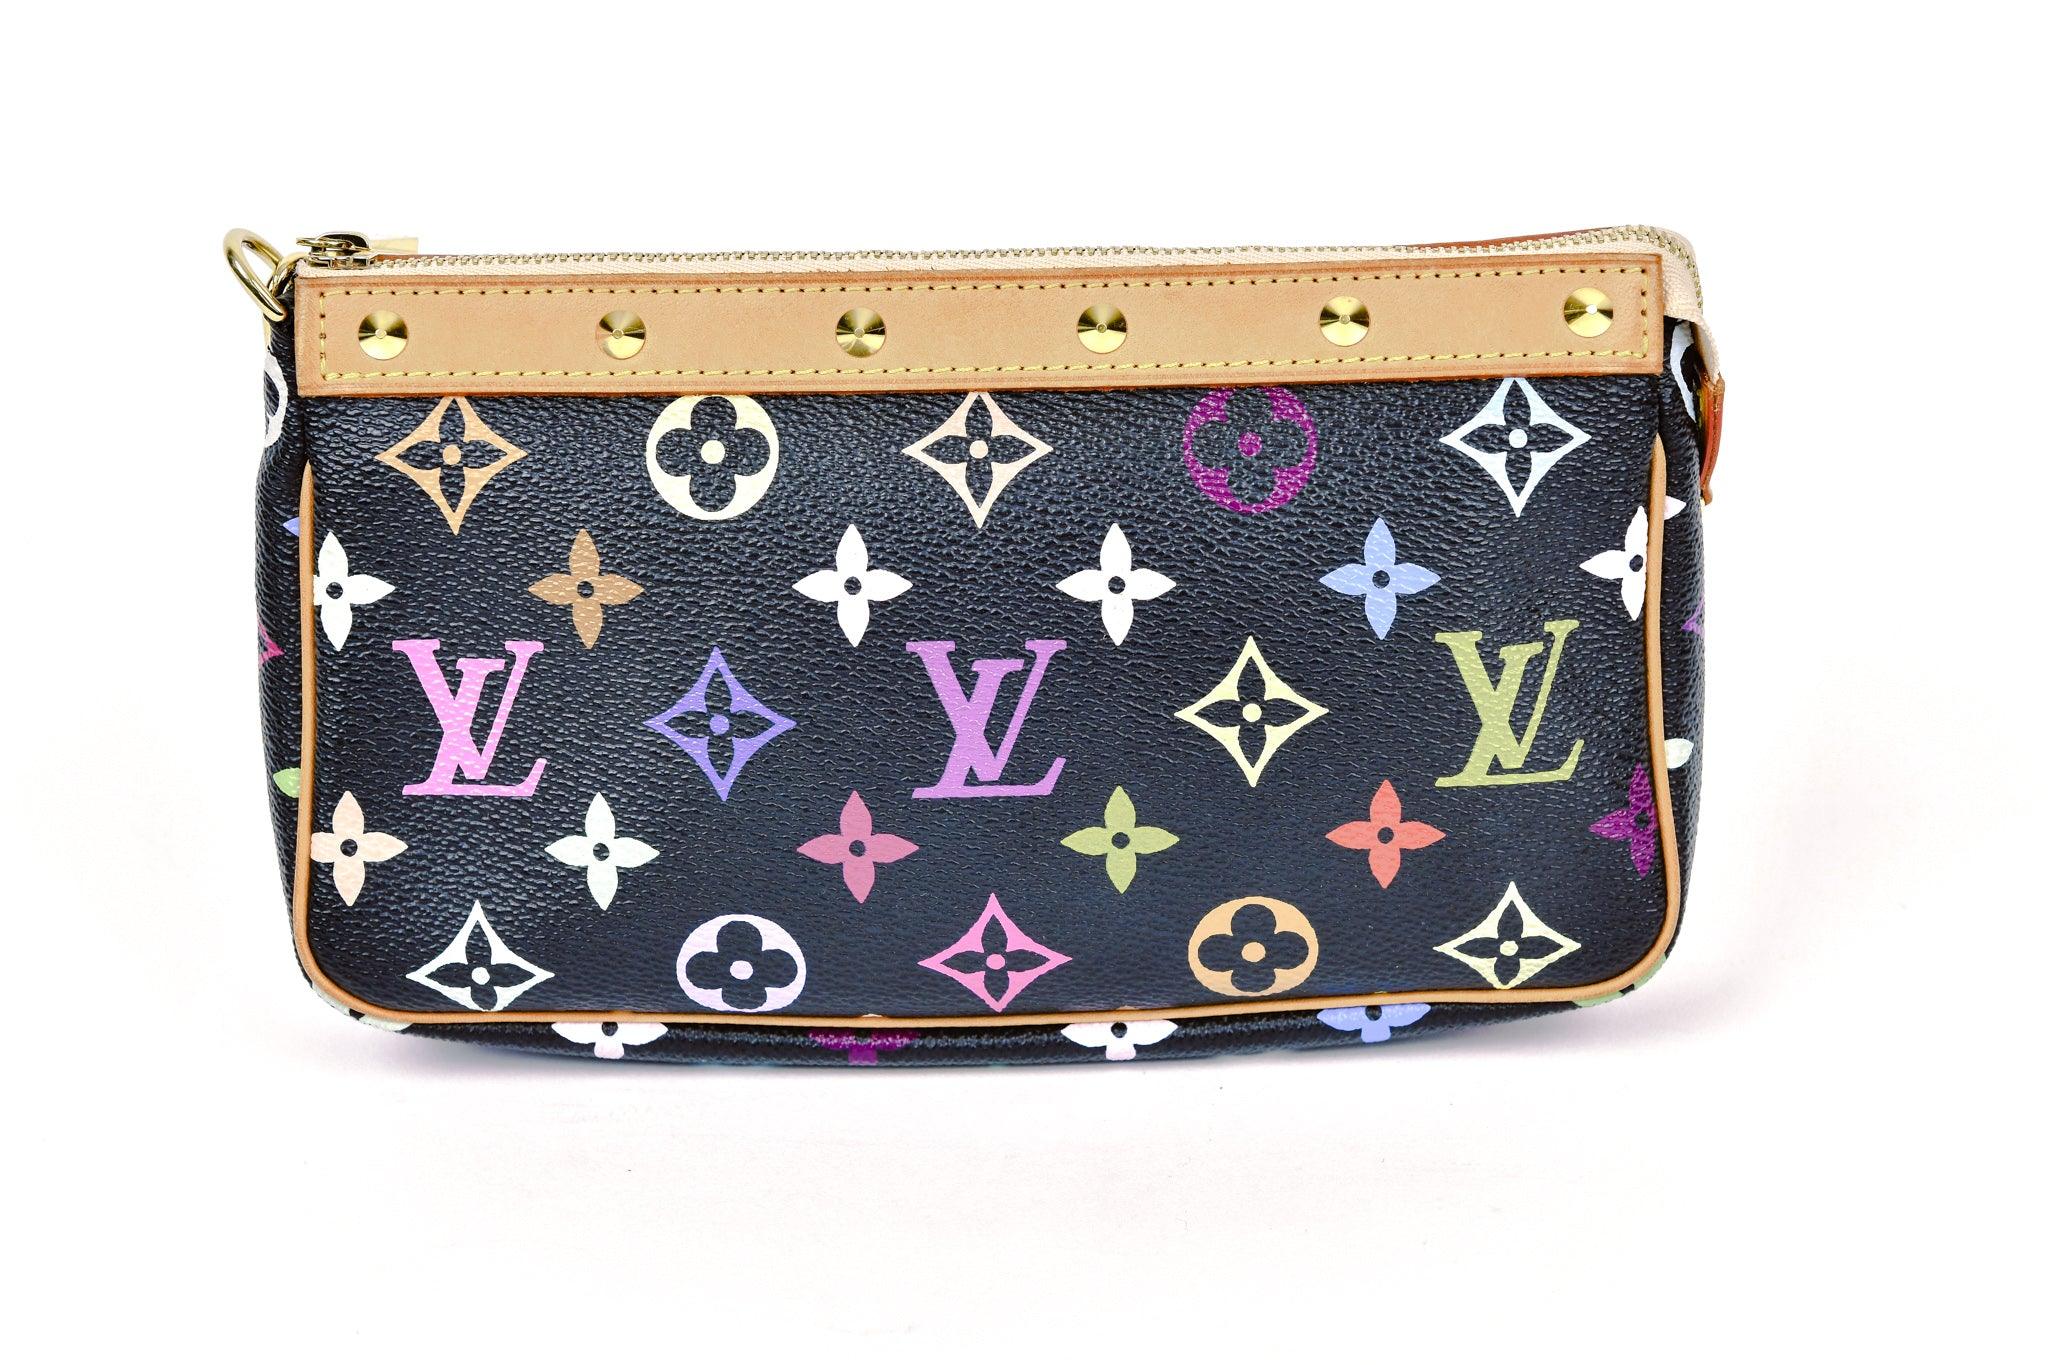 100% AUTH. Louis Vuitton Monogram Ellipse Mm Handbag- EXCELLENT - PRISTINE!  